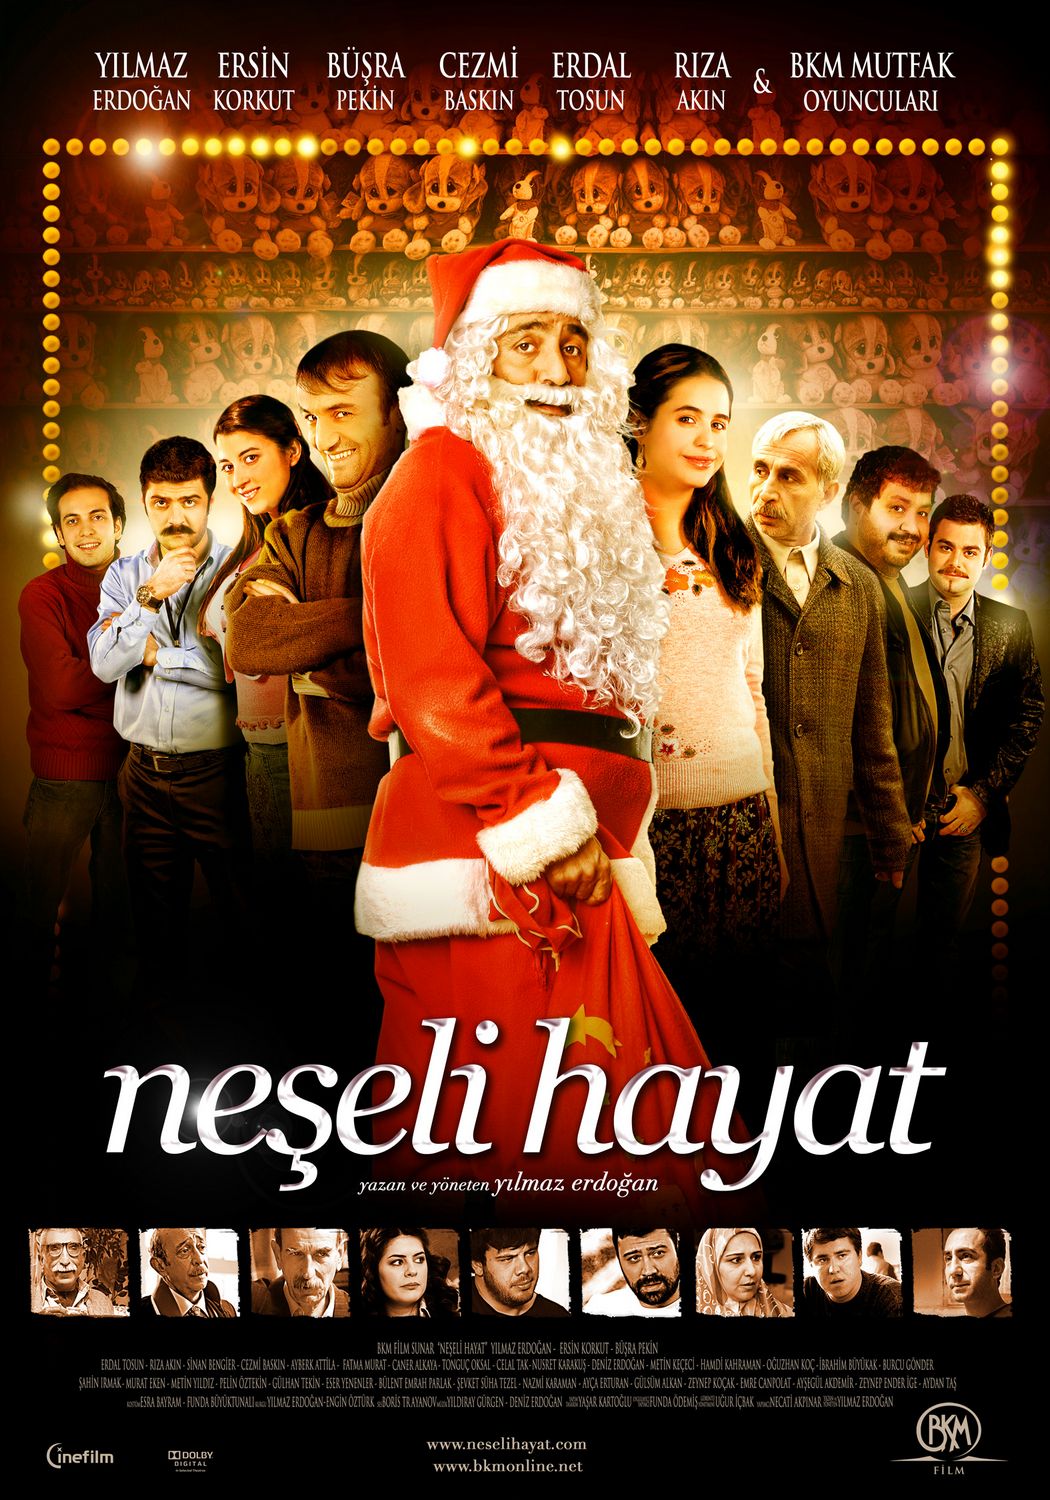 Extra Large Movie Poster Image for Neseli hayat (#2 of 2)